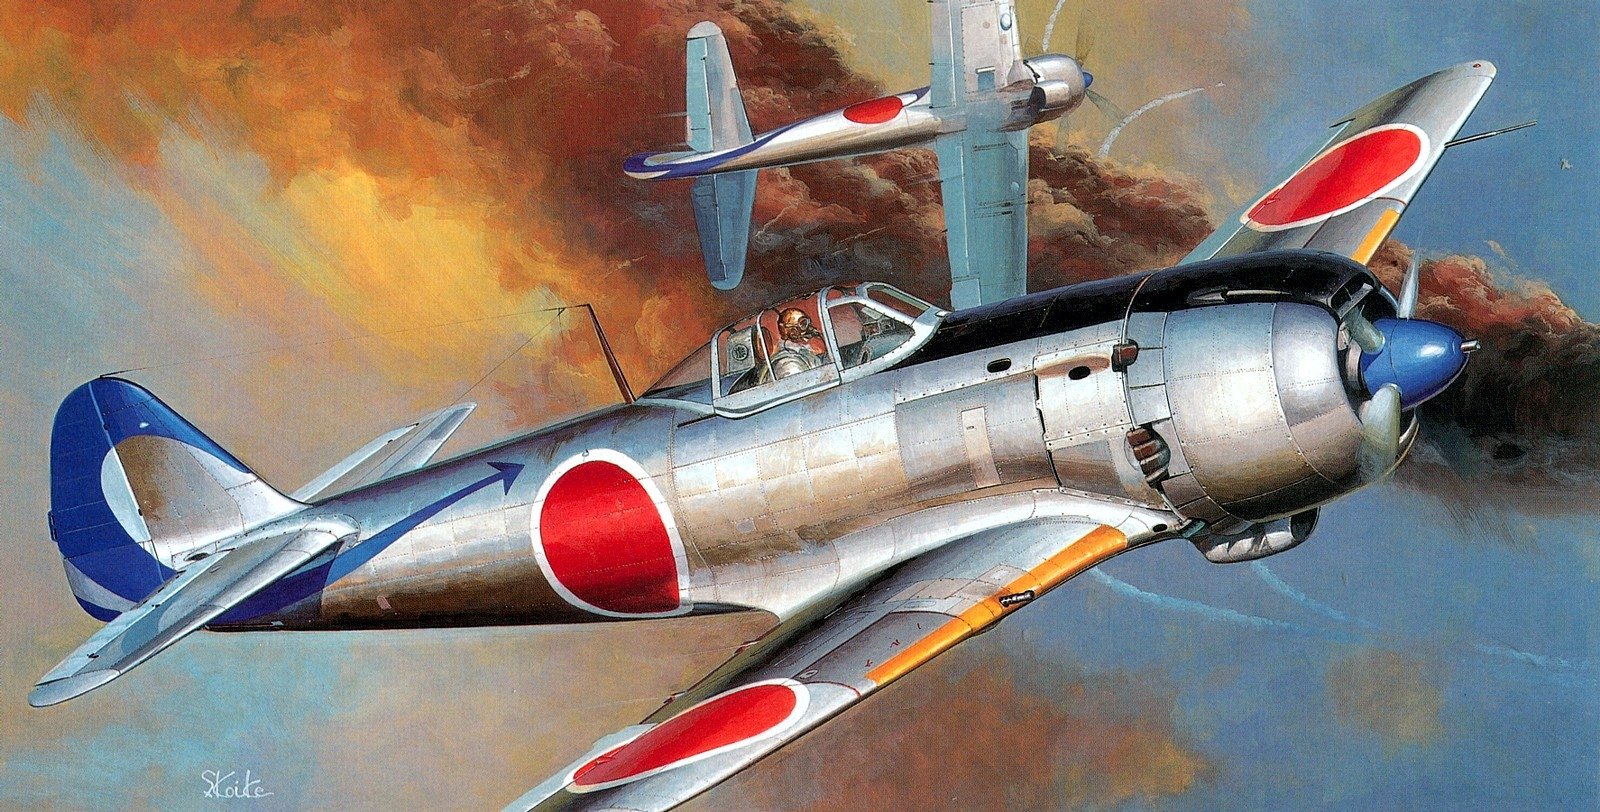 Mitsubishi A6M Zero Wallpaper and Background Imagex812